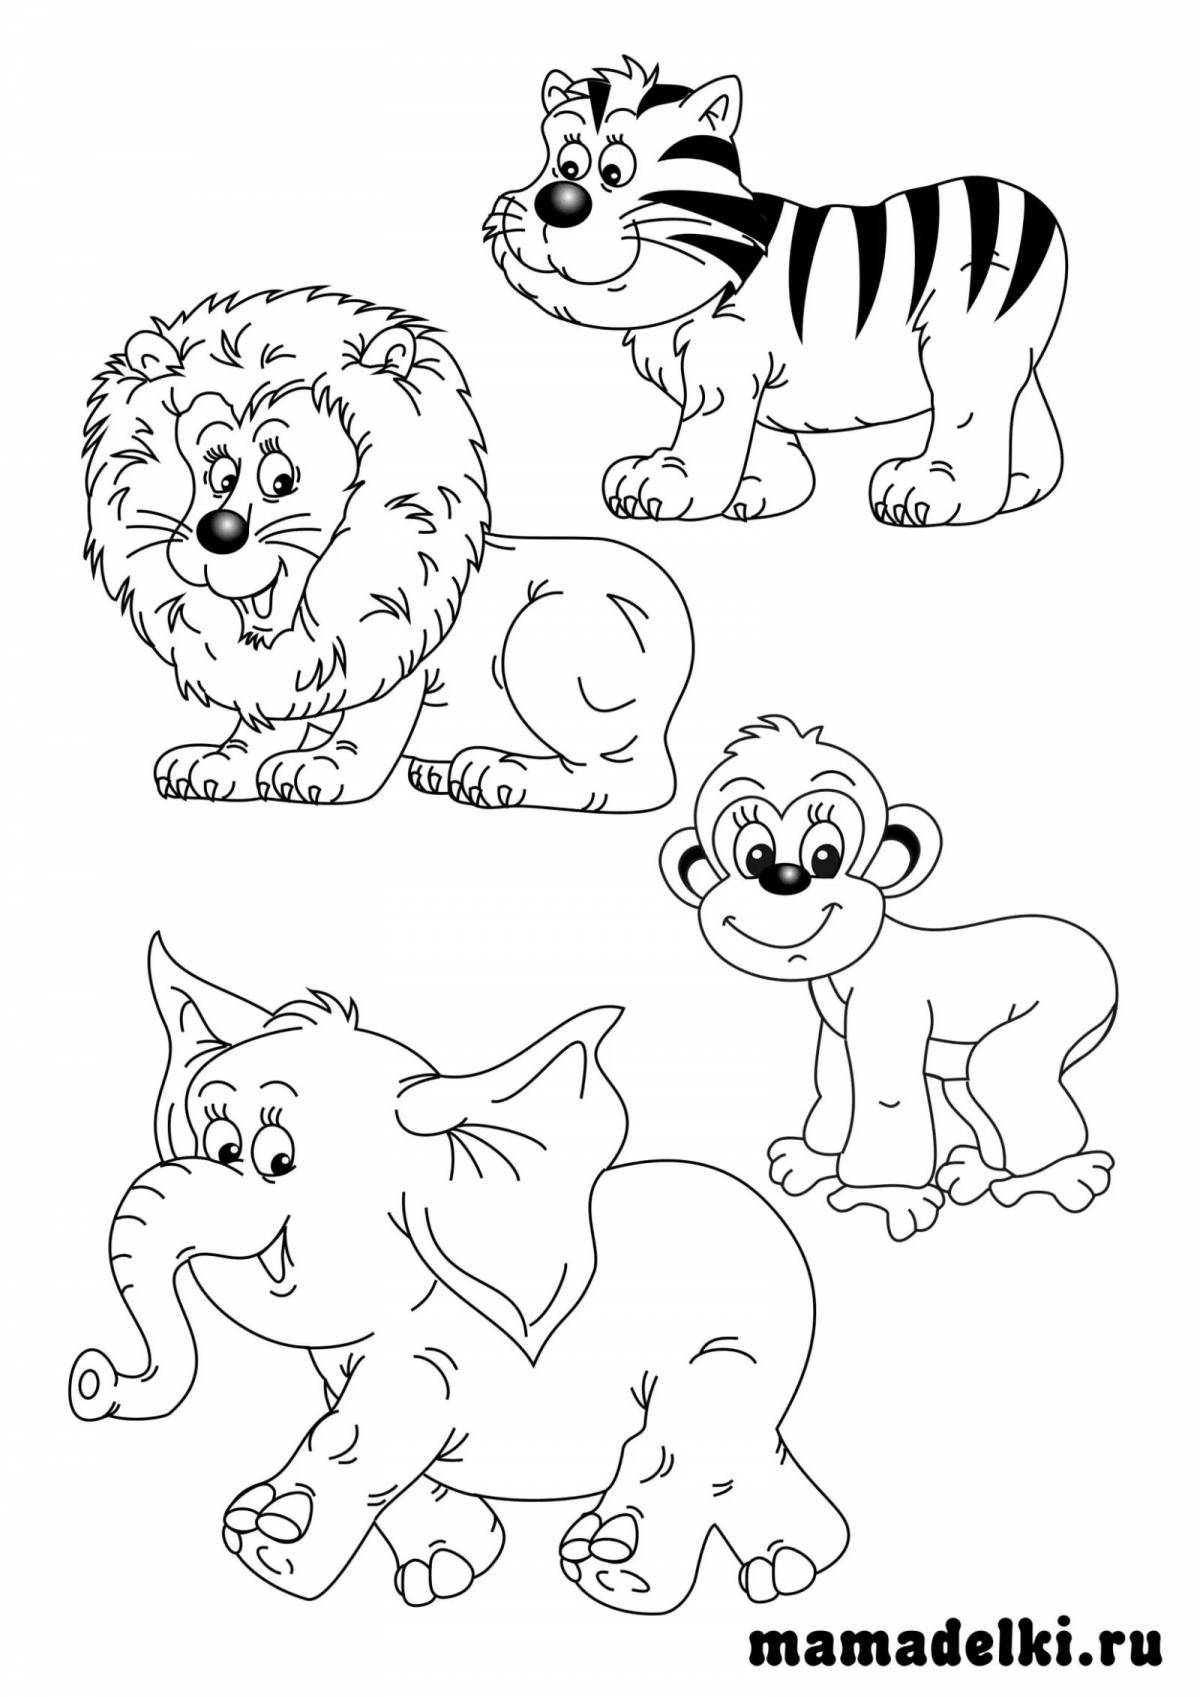 Adorable pet coloring book